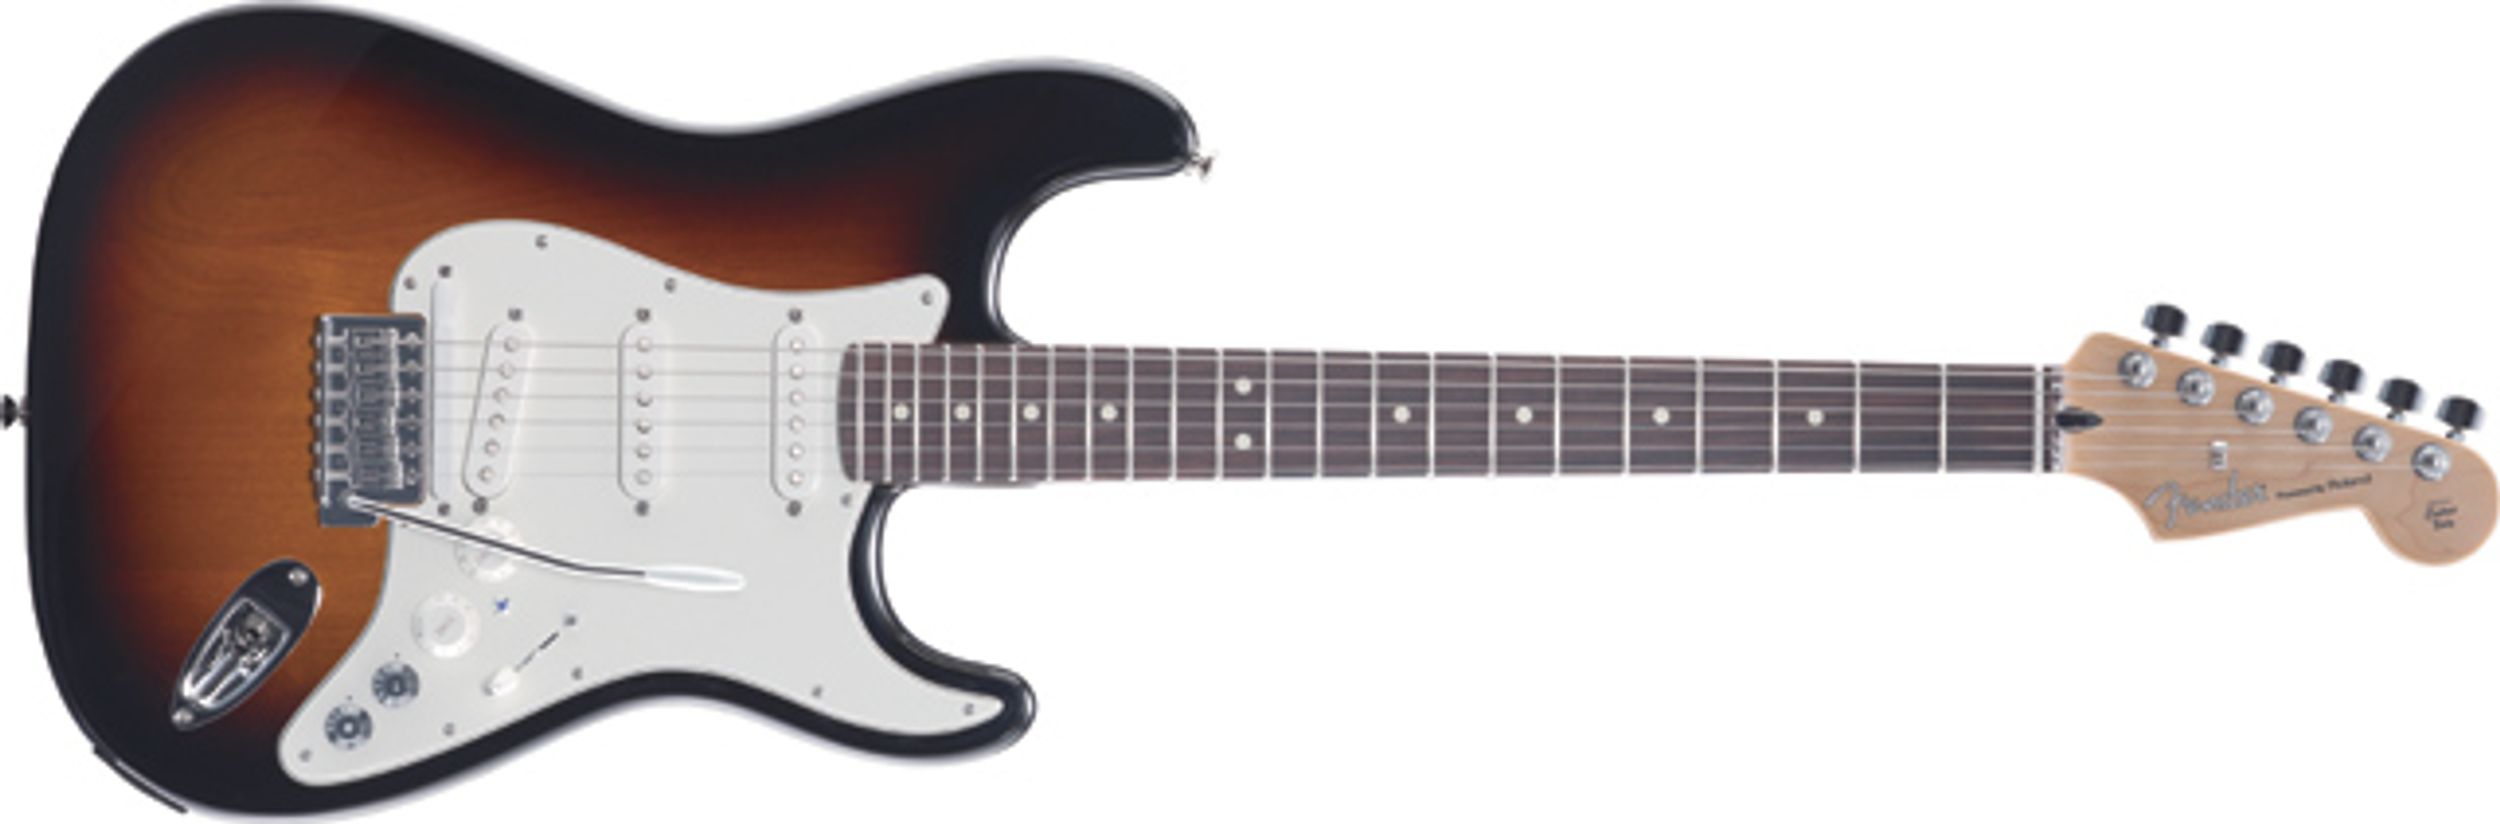 Roland G-5 VG Fender Stratocaster Electric Guitar Review